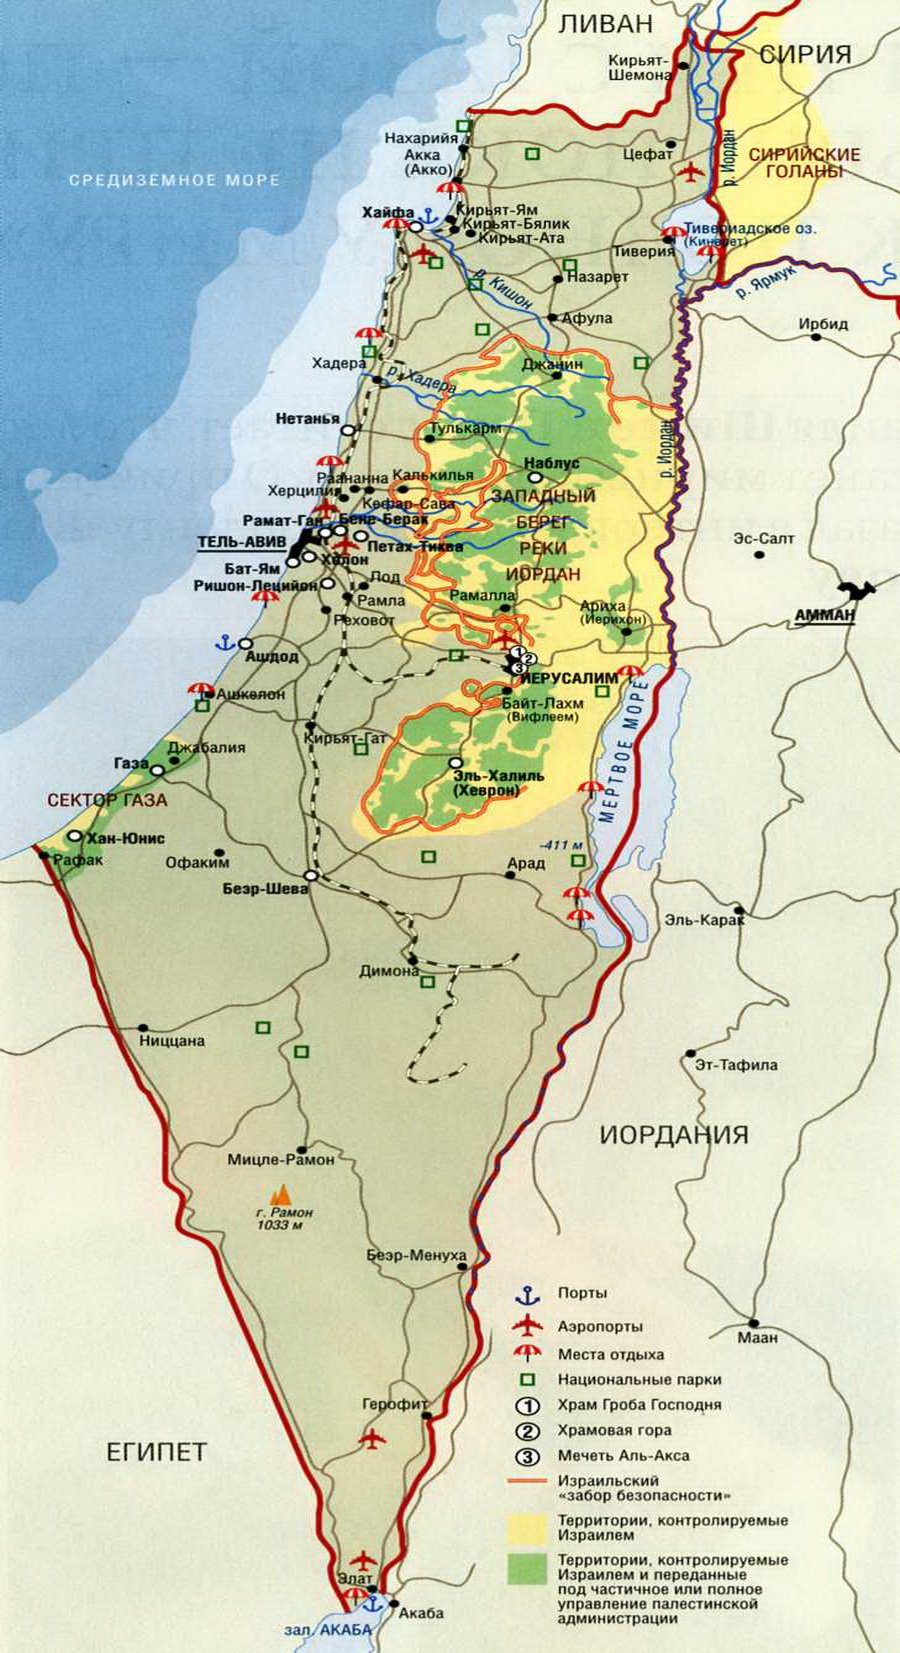 http://gursesintour.com/wp-content/uploads/2014/01/israel-map.jpg